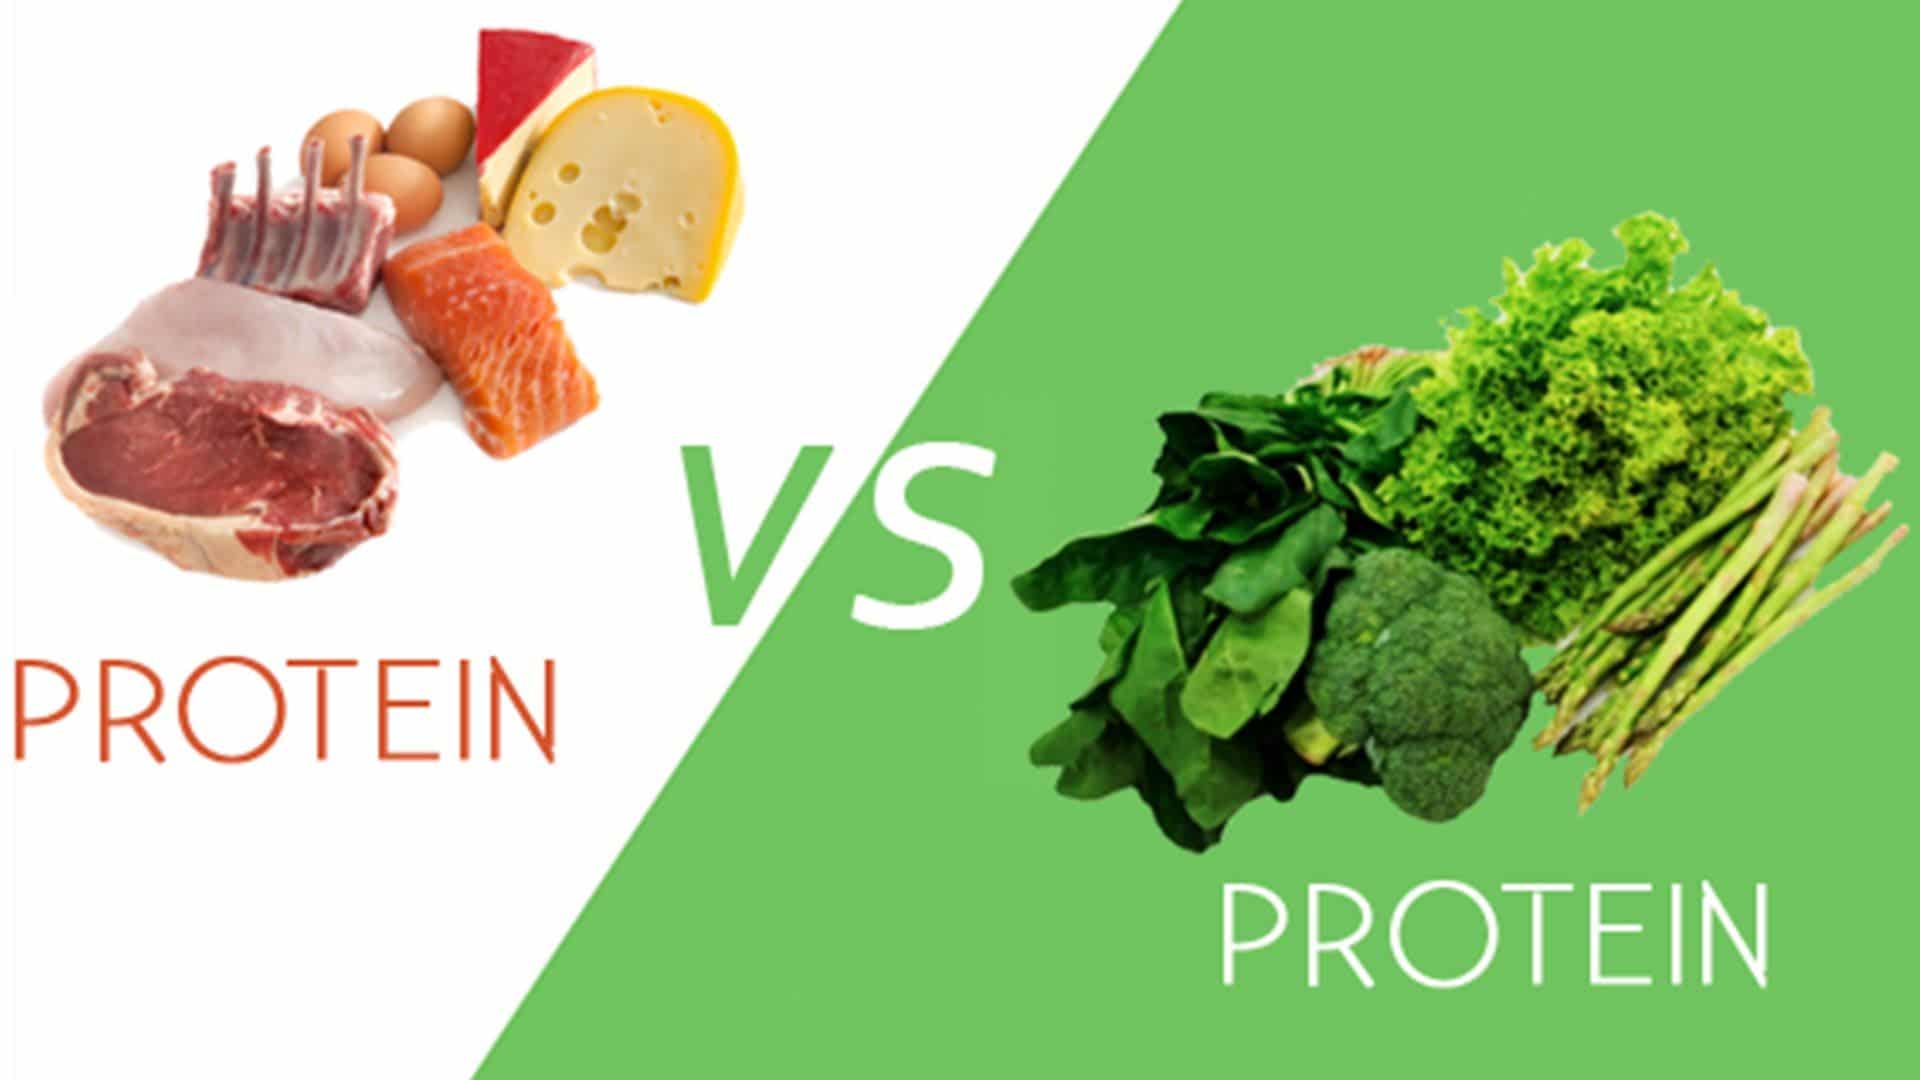 protein vs protein2